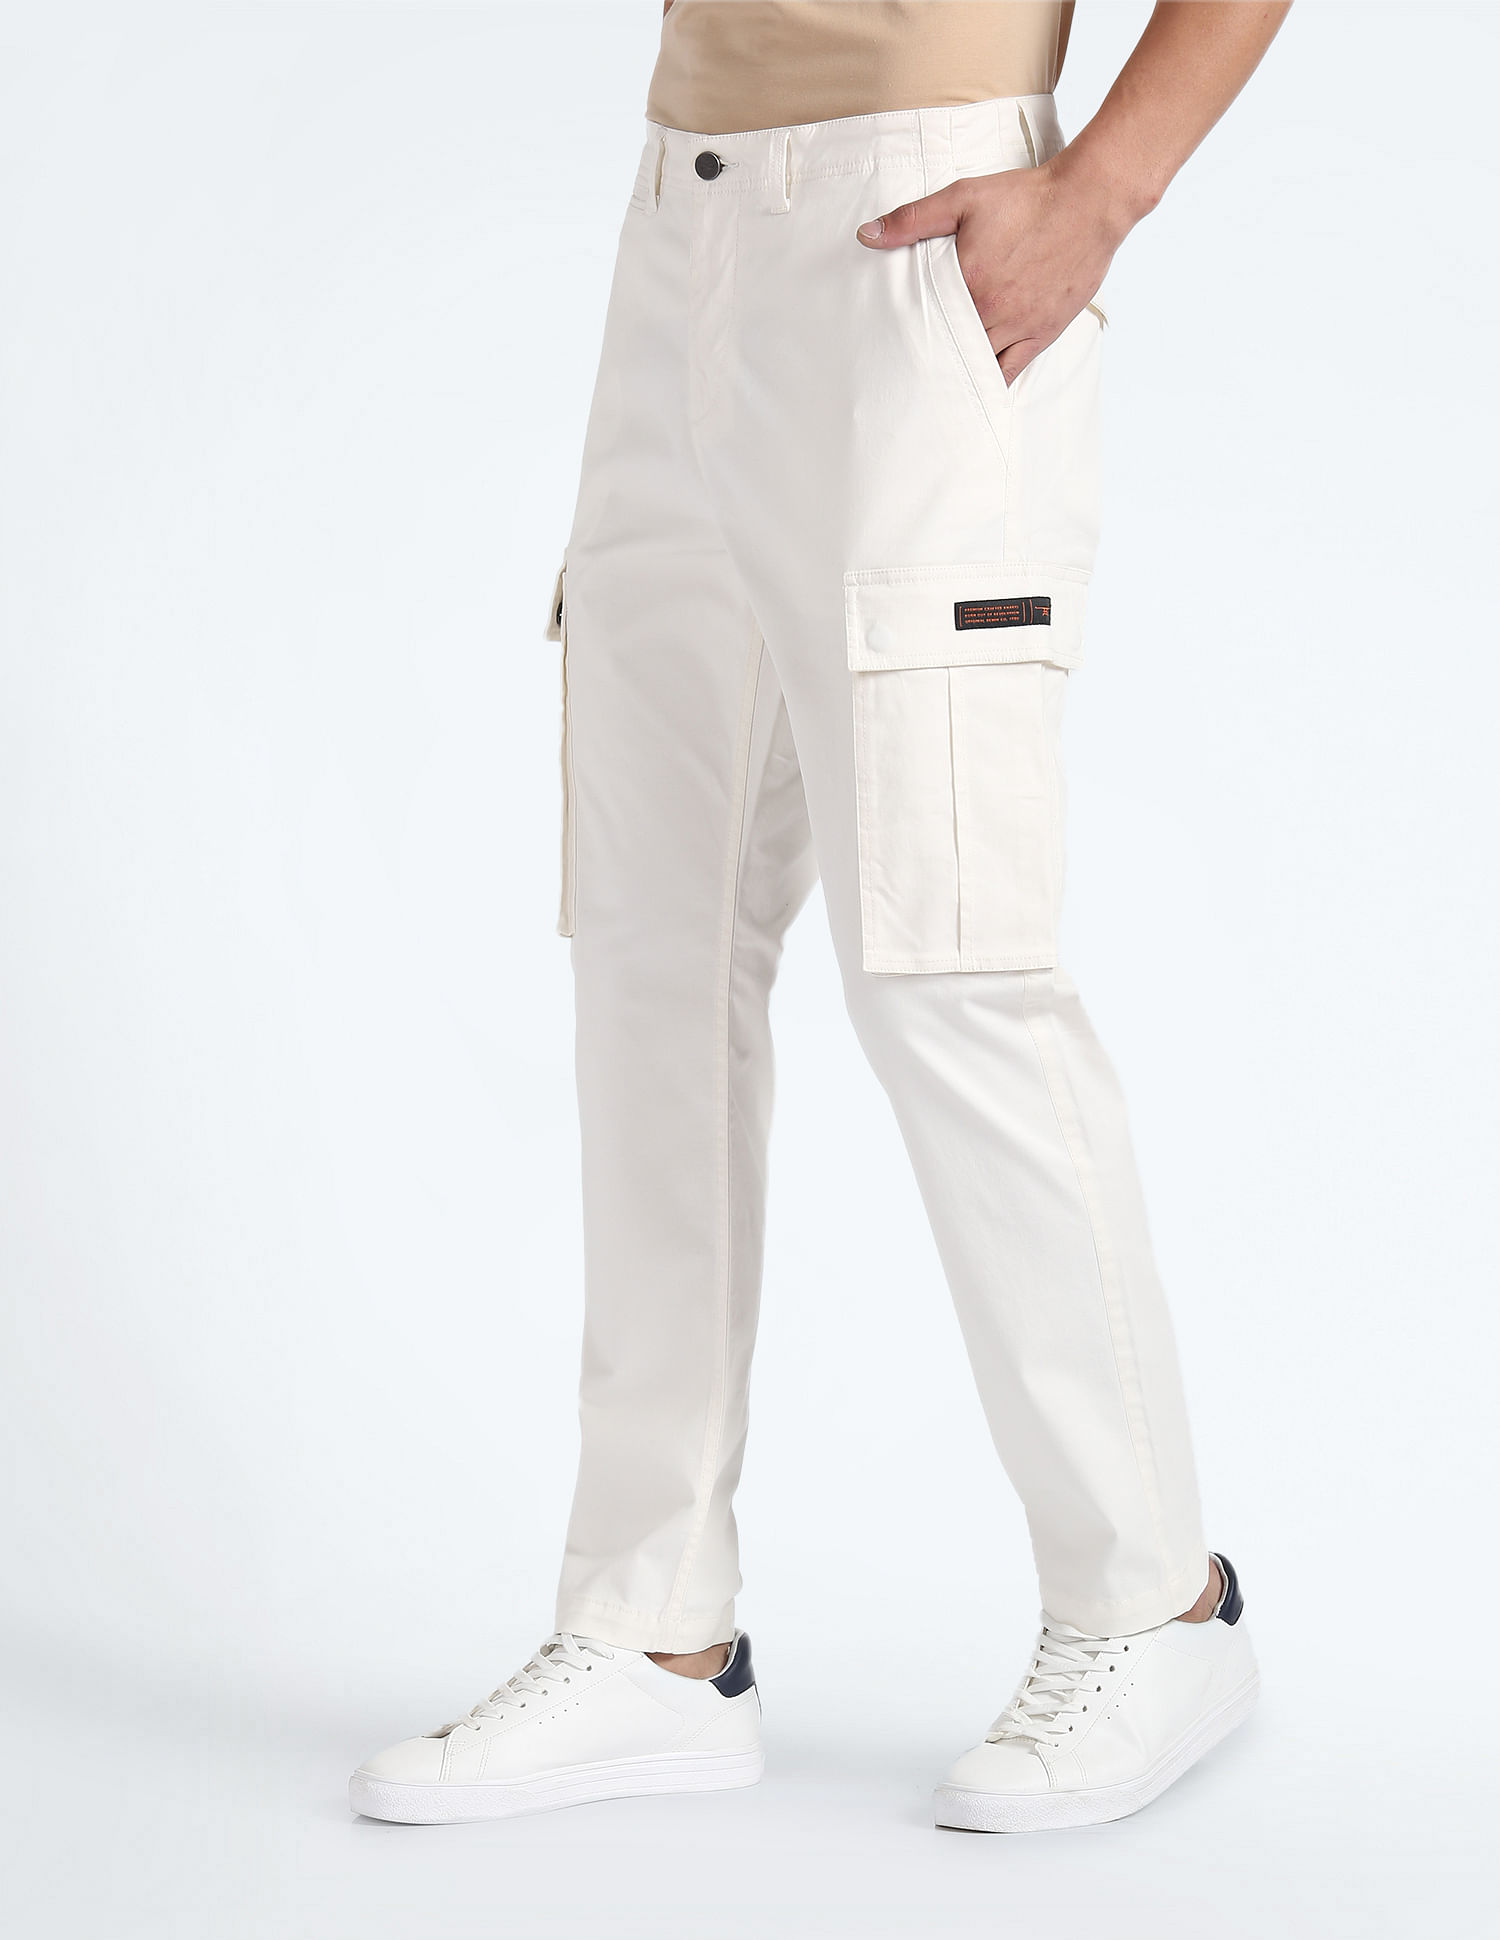 fcity.in - White Cargo Pant Trendy Comfortable Men Cargo Pant Stylish Cargo